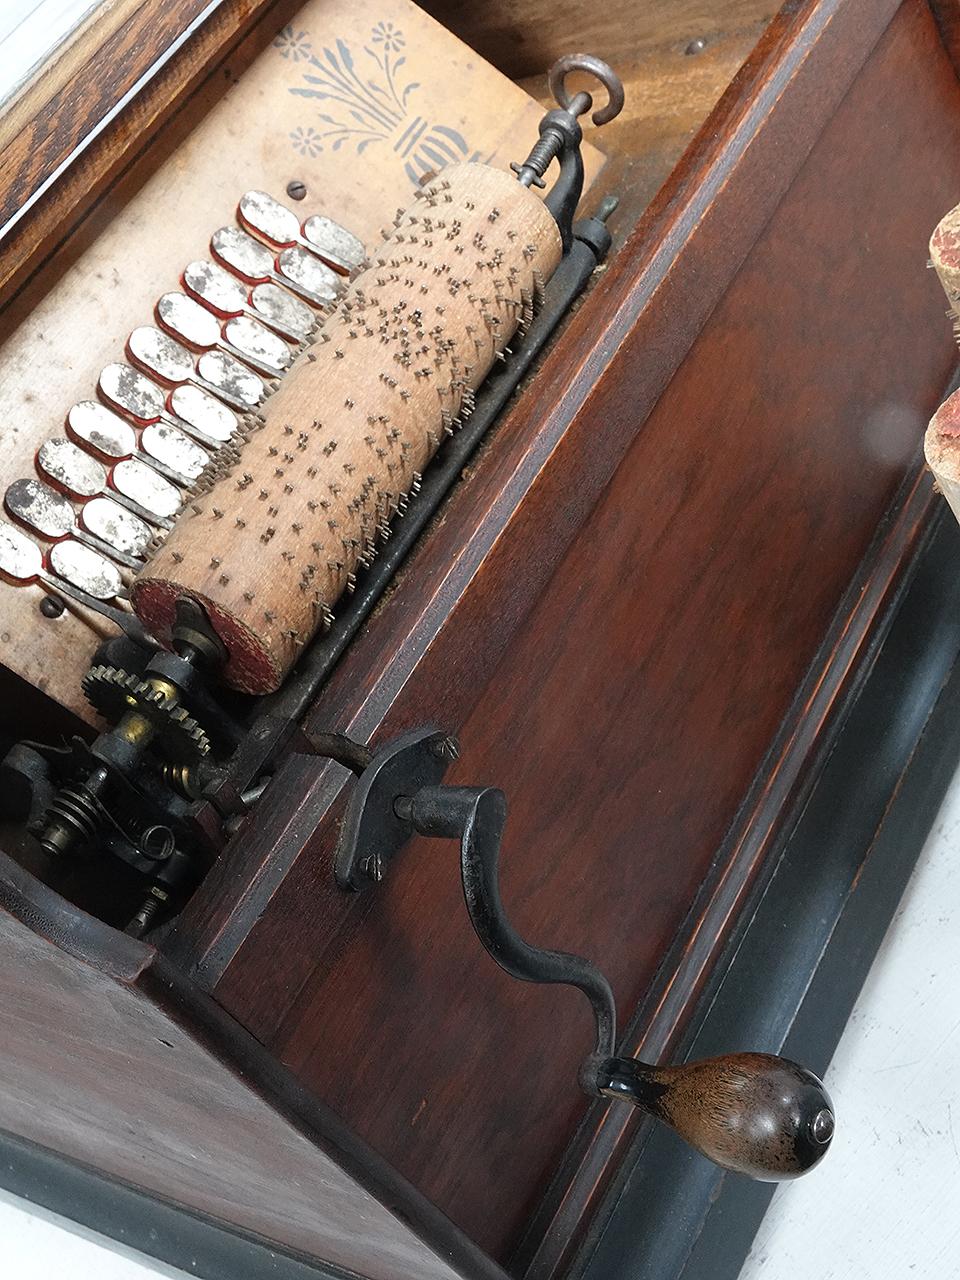 Aesthetic Movement Hand Crank 1885 Concert Rollor Organ